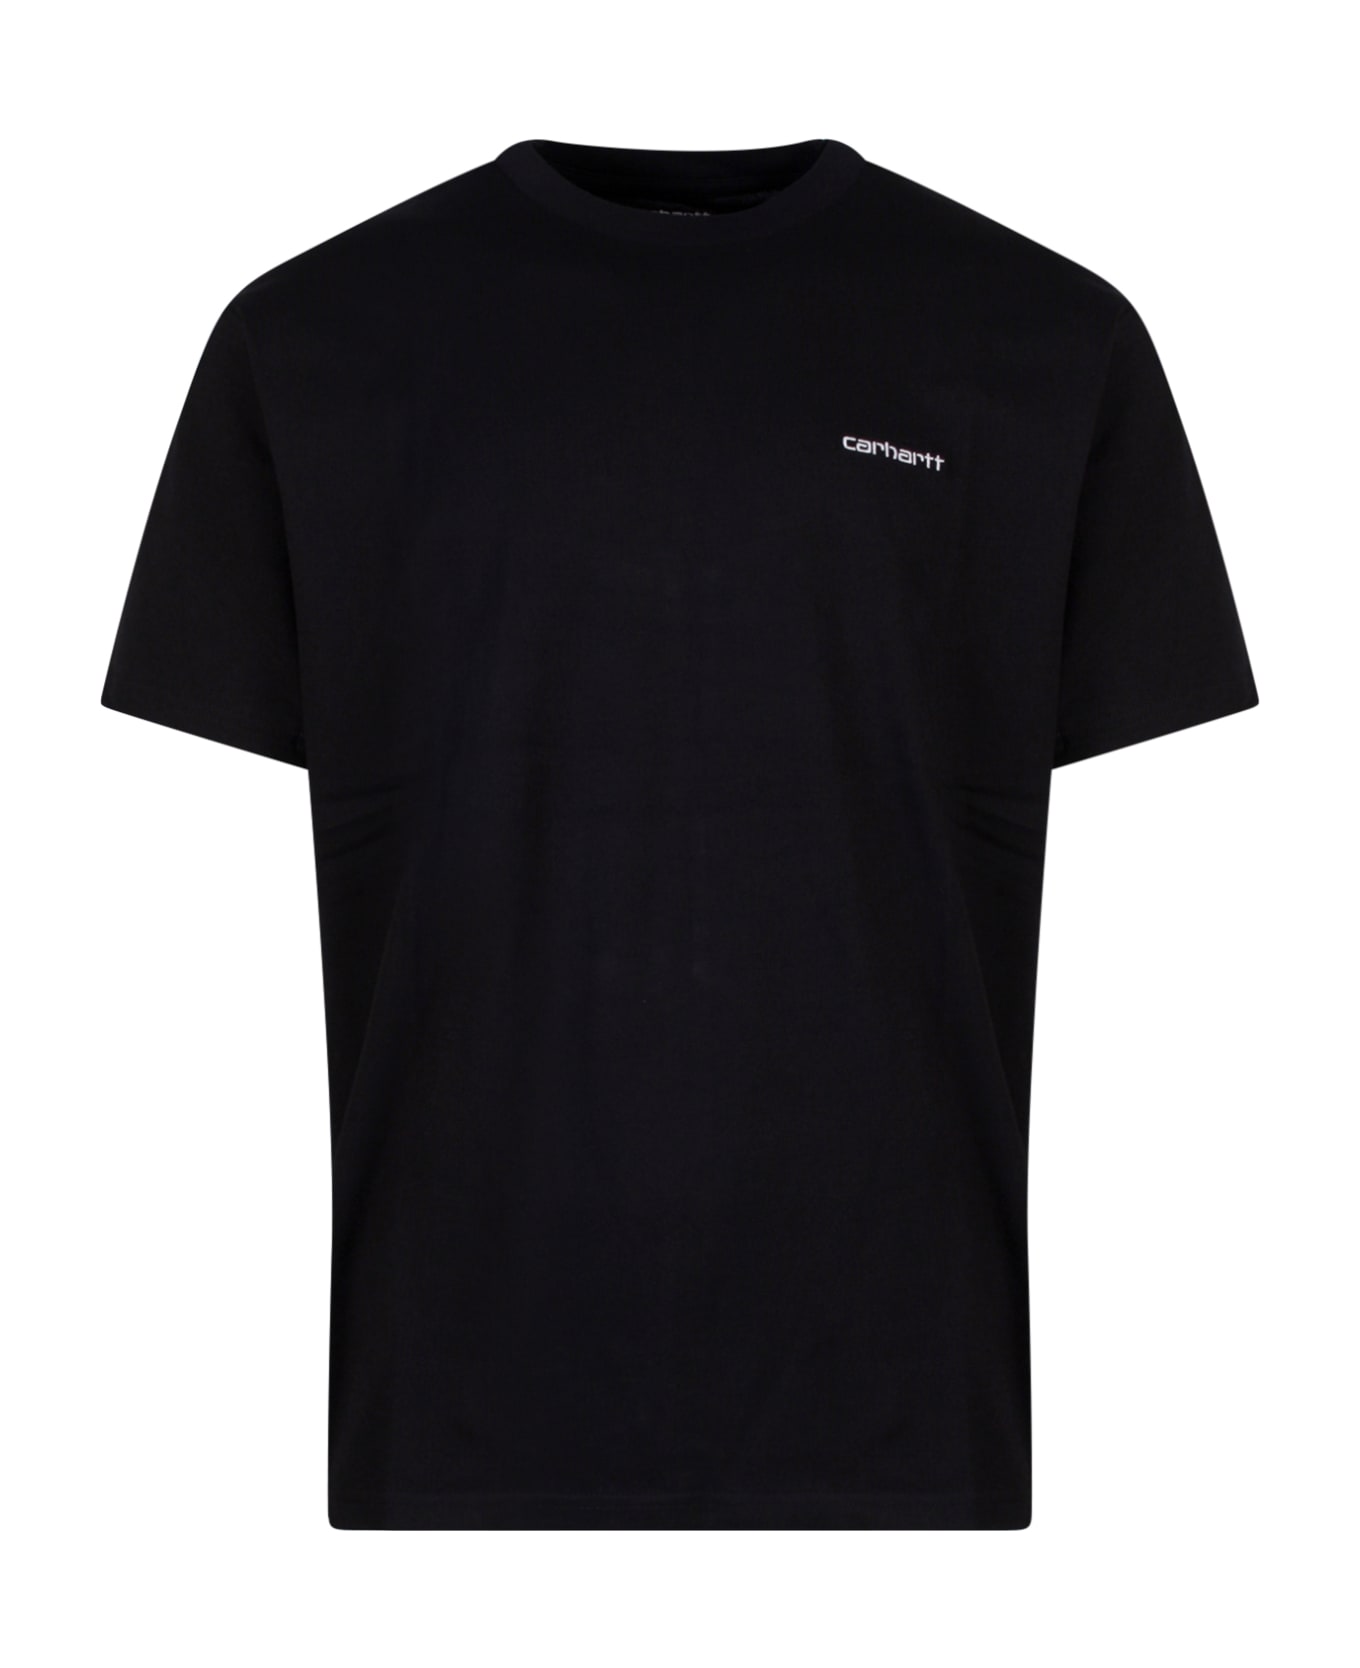 Carhartt T-shirt - Xx Black White シャツ